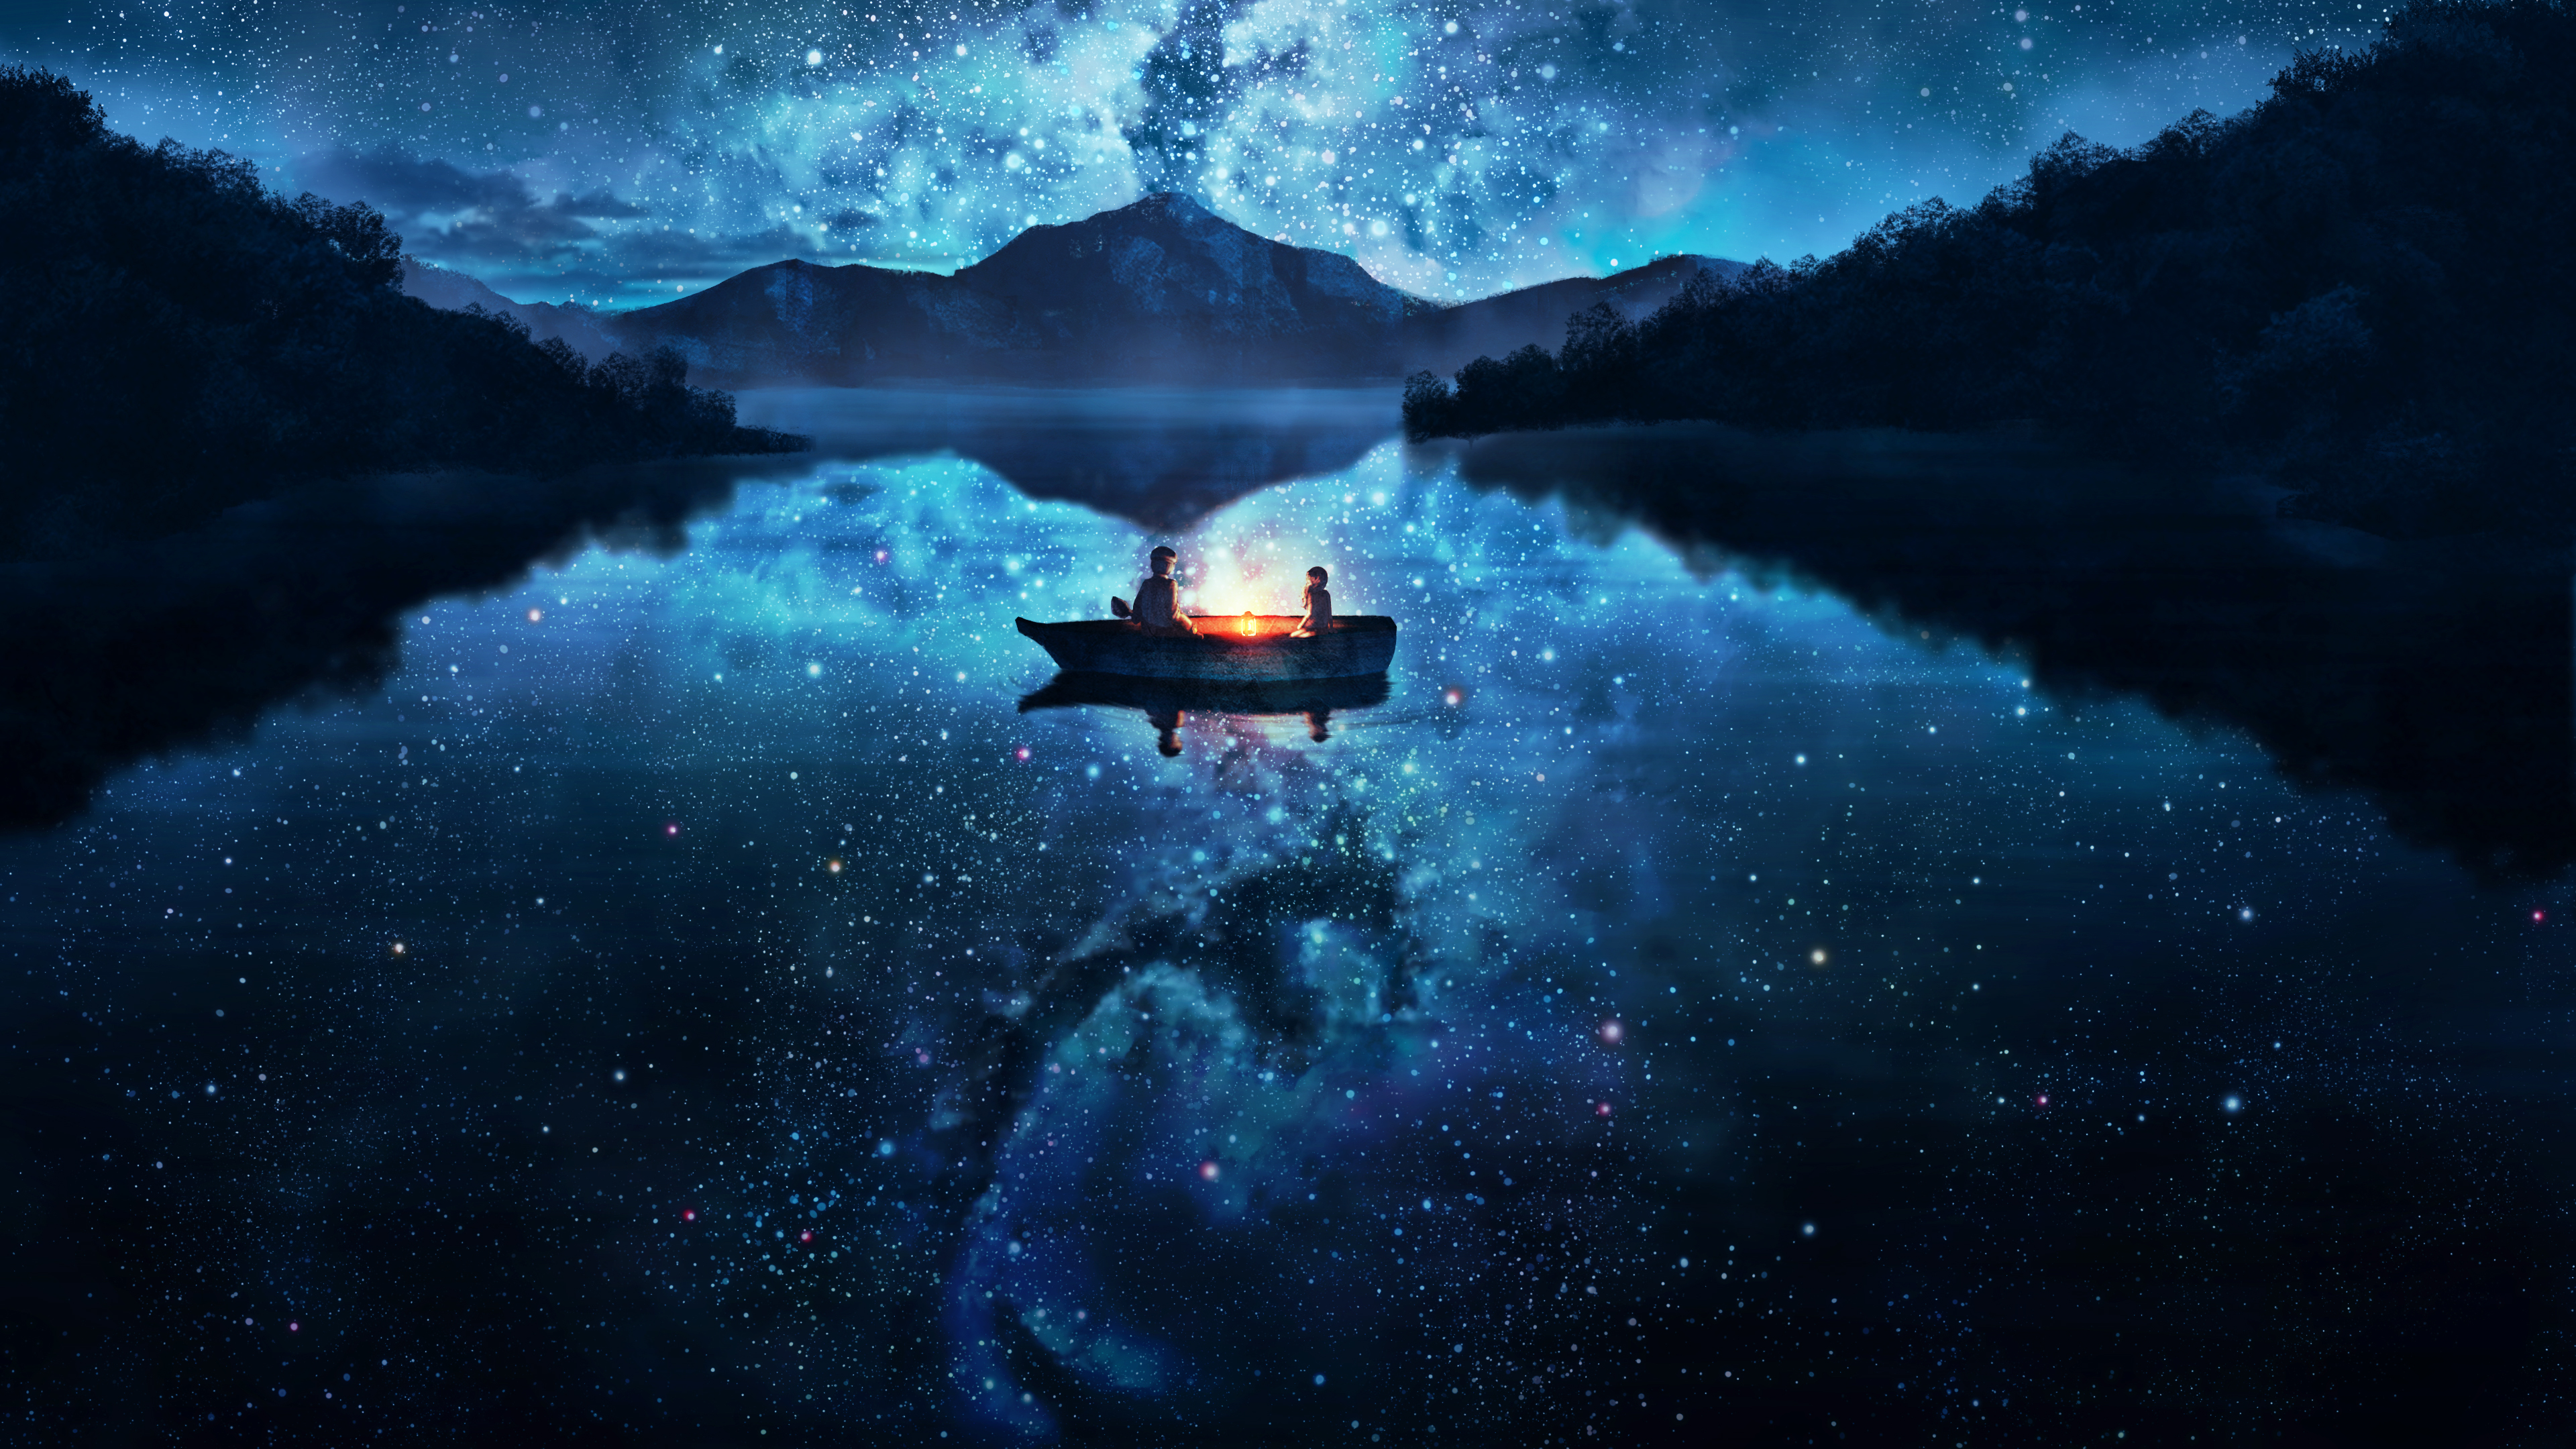 Free HD anime, lake, reflection, night, starry sky, boat, scenic